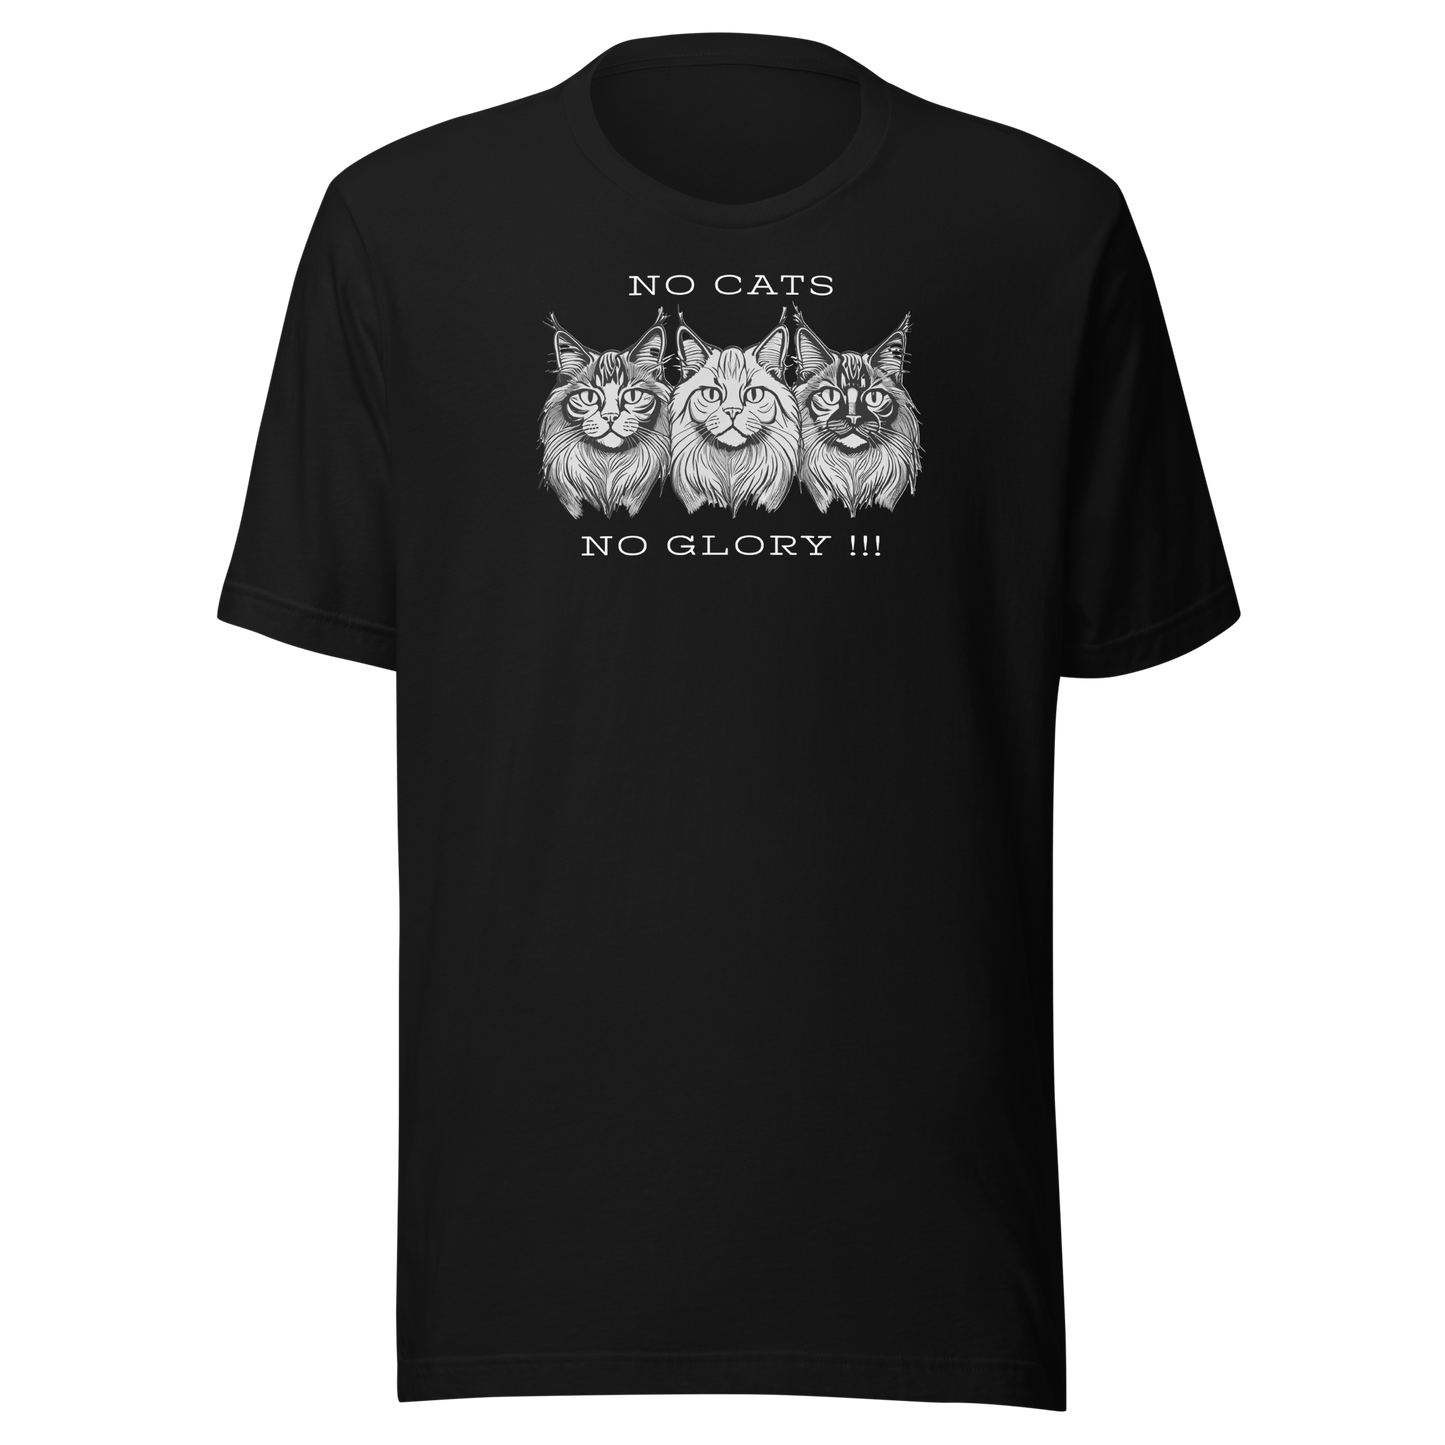 Unisex T-Shirt - "No Cats No Glory" 3 cats front print